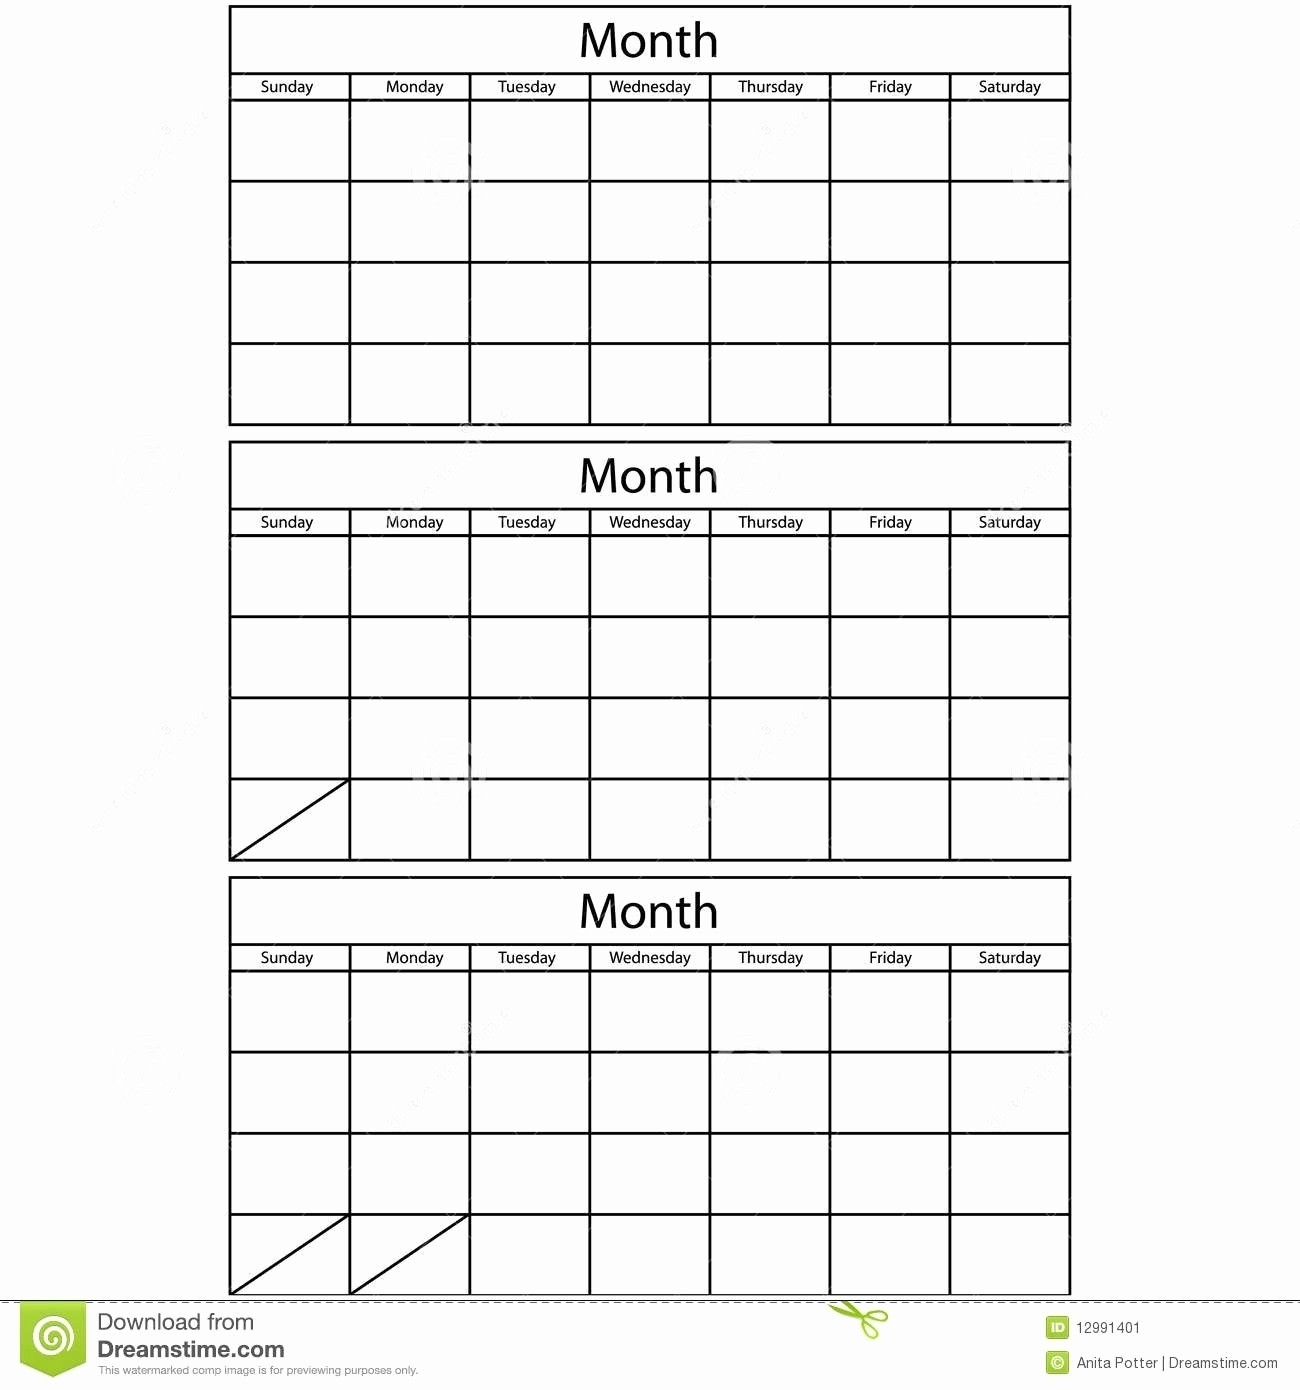 Free Editable Monthly Calendar Printable - Calendar  Free Downloadable Editable Calendar